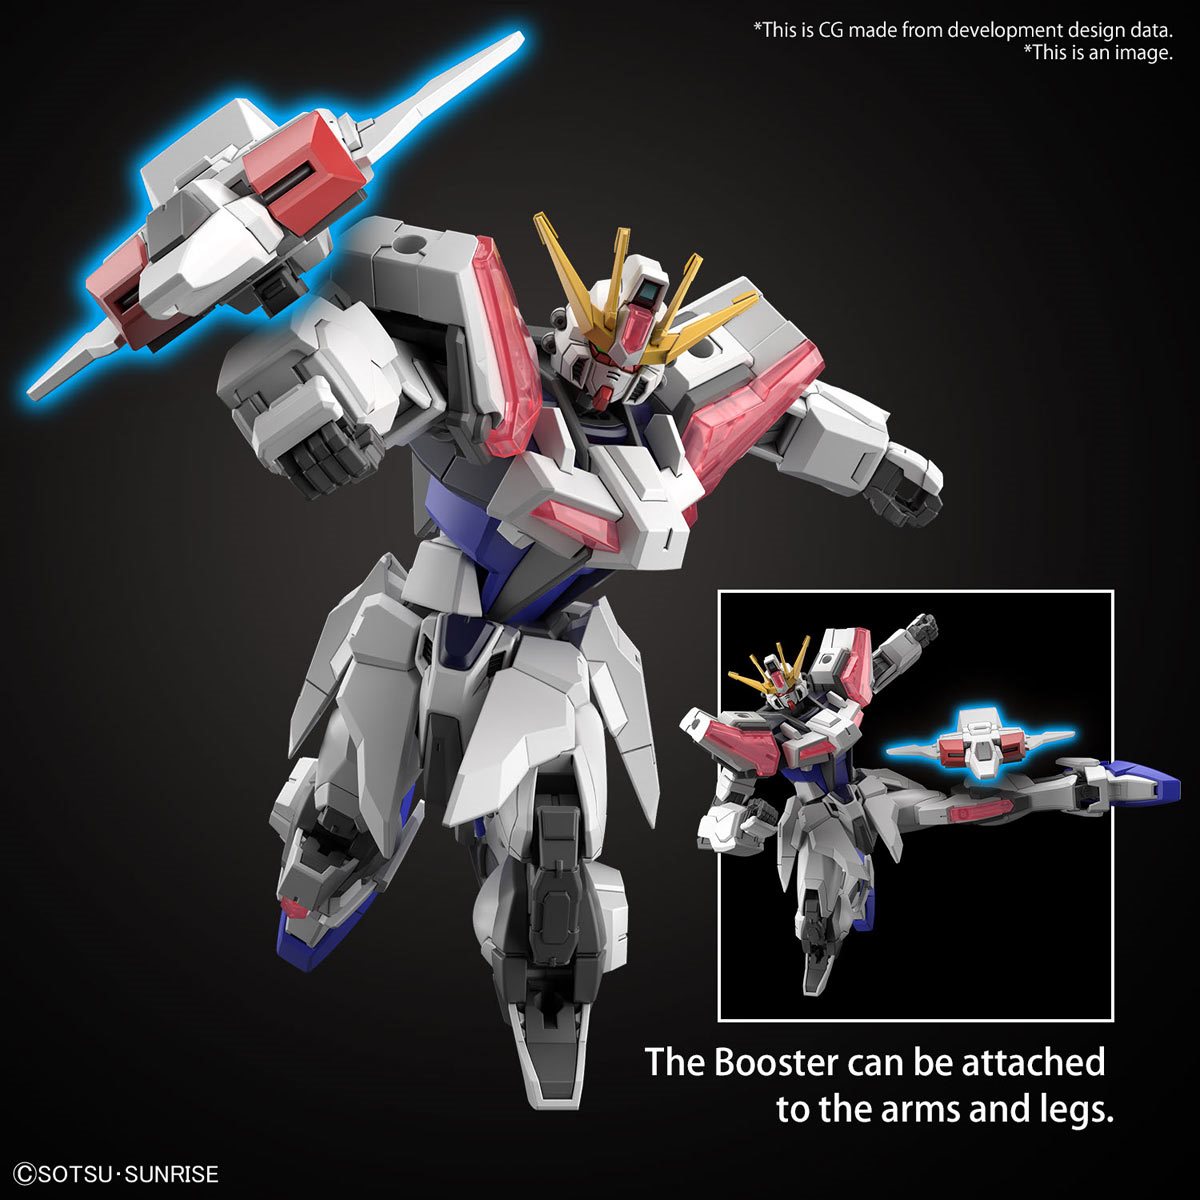 Bandai Hobby Gunpla Entry Grade Model Kit: Gundam Build Metaverse - Build Strike Exceed Escala 1/144 Kit De Plastico